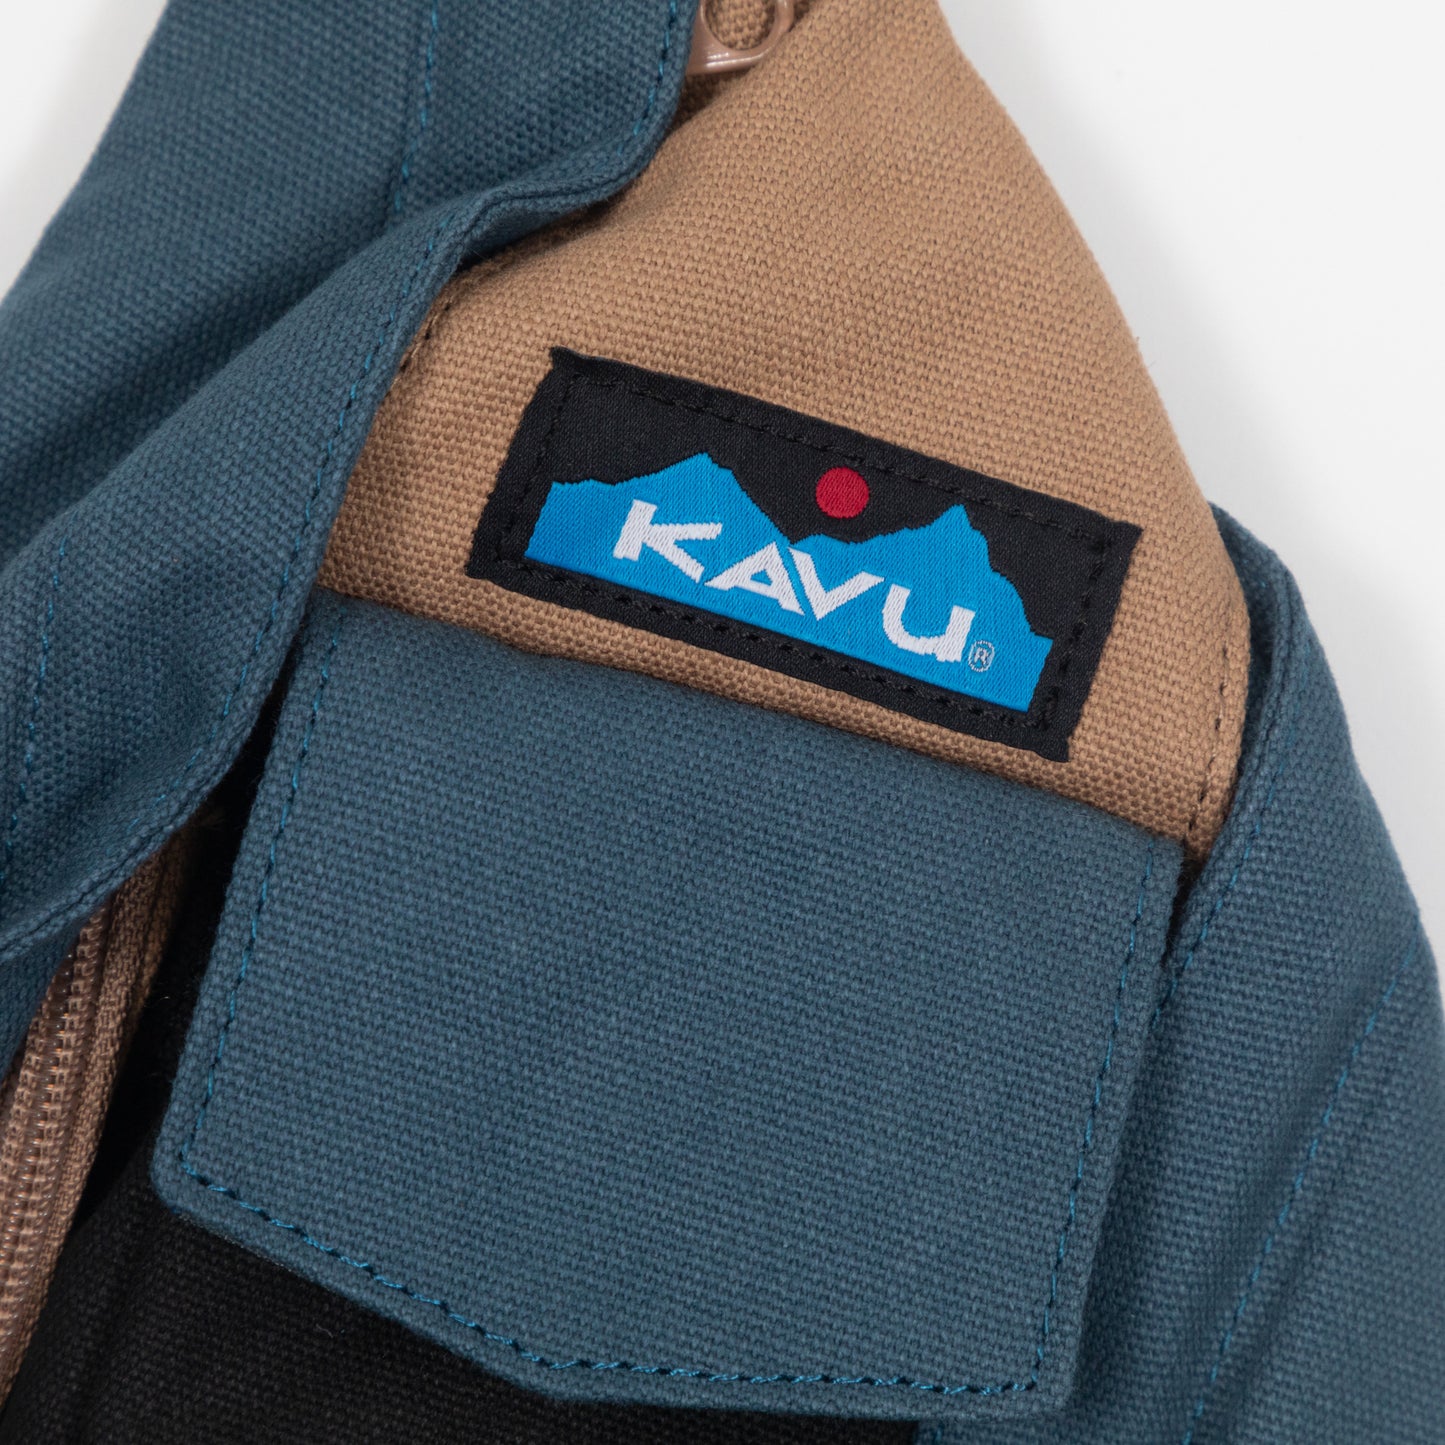 KAVU Mini Rope Bag in BLUE & TAN